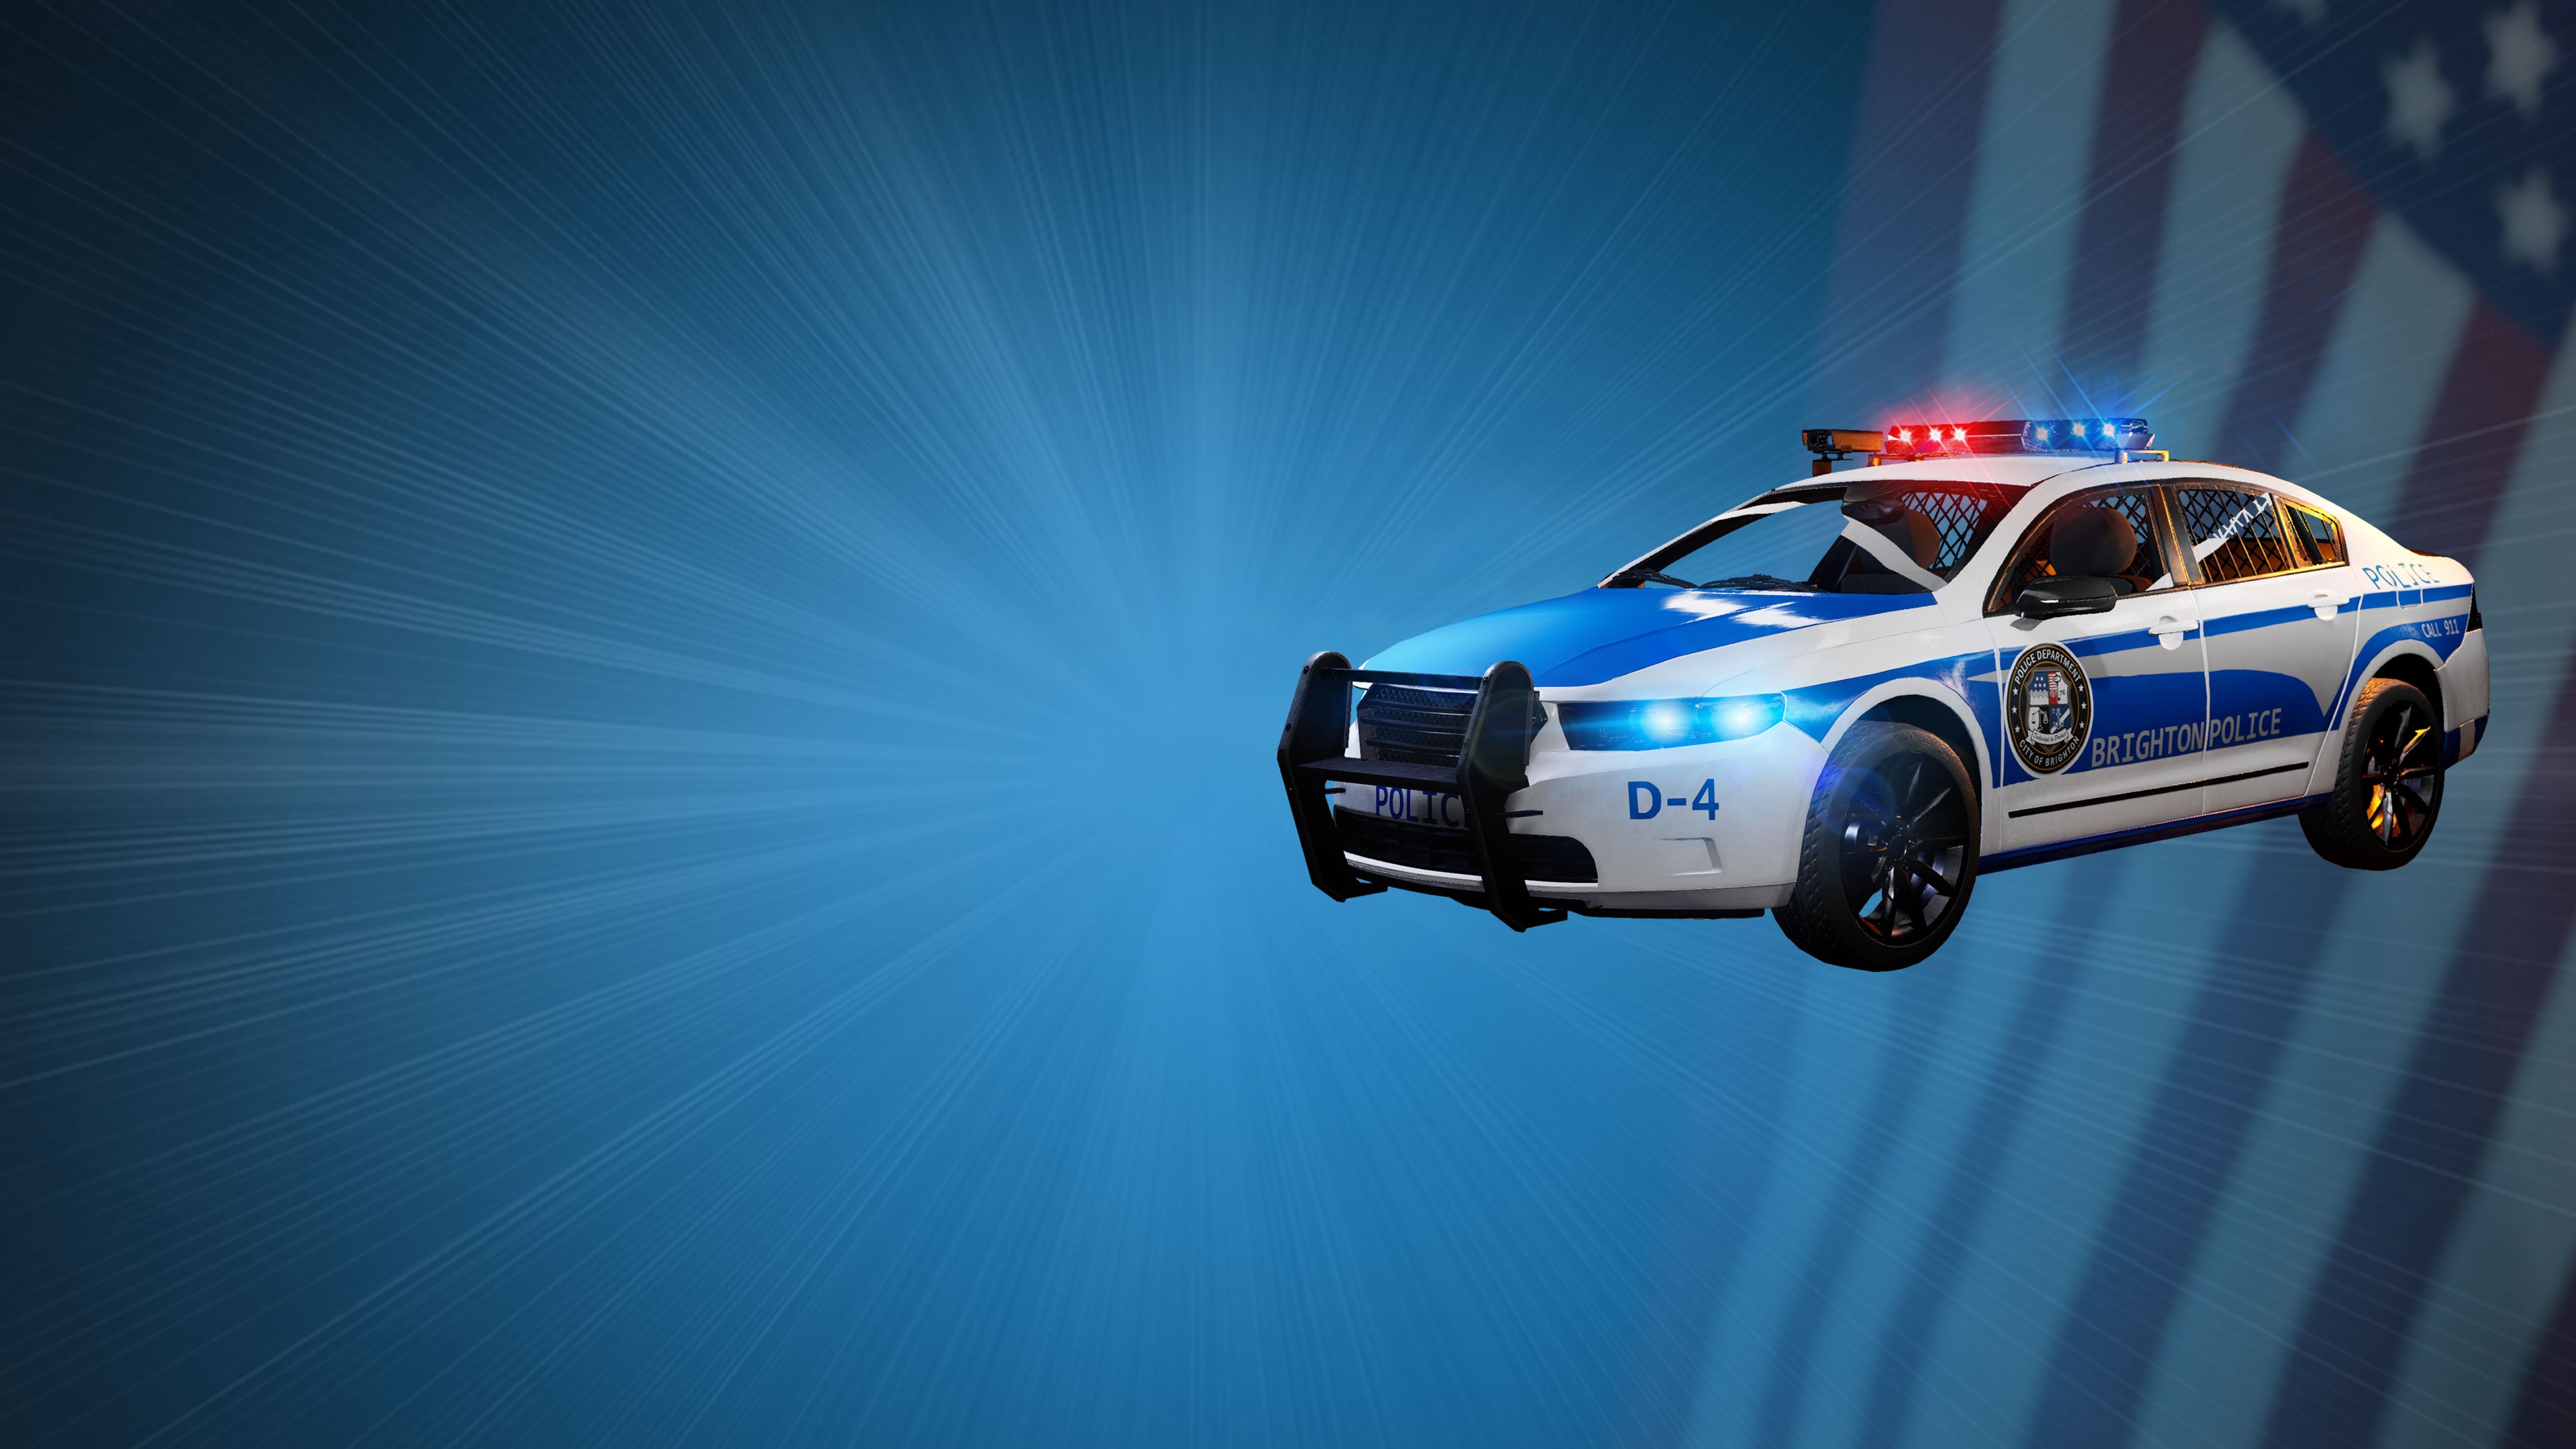 Police Simulator: Patrol Officers: Surveillance Police Vehicle DLC